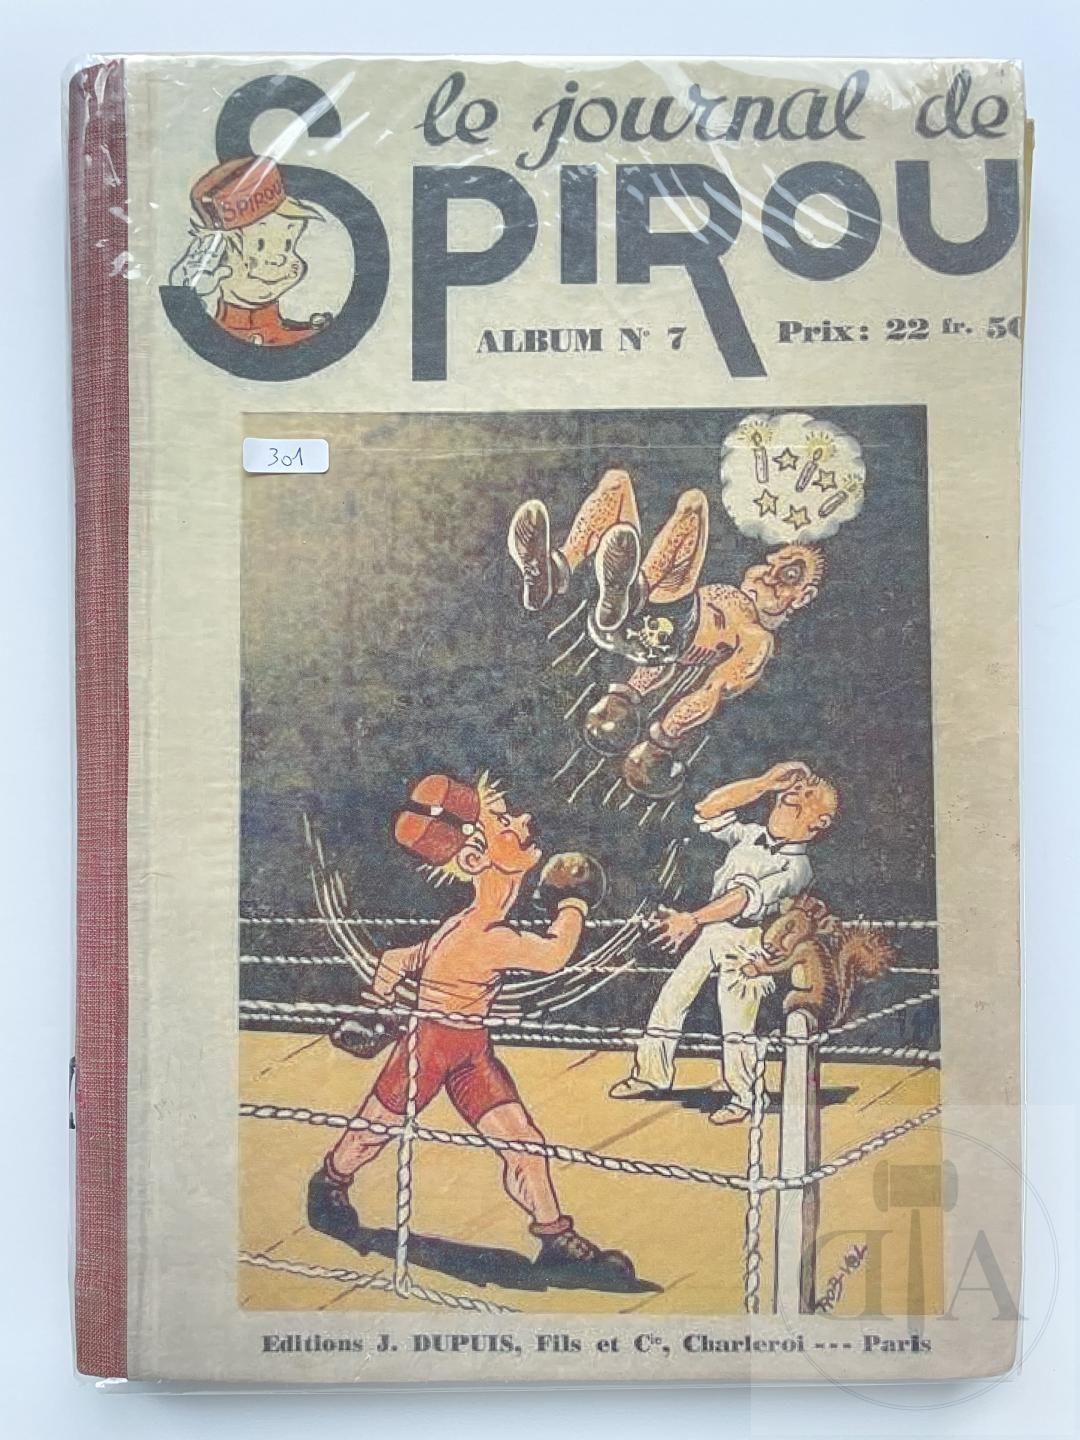 Null Le journal de Spirou/Reliure editeur n°7 del 1940. Completo in buone condiz&hellip;